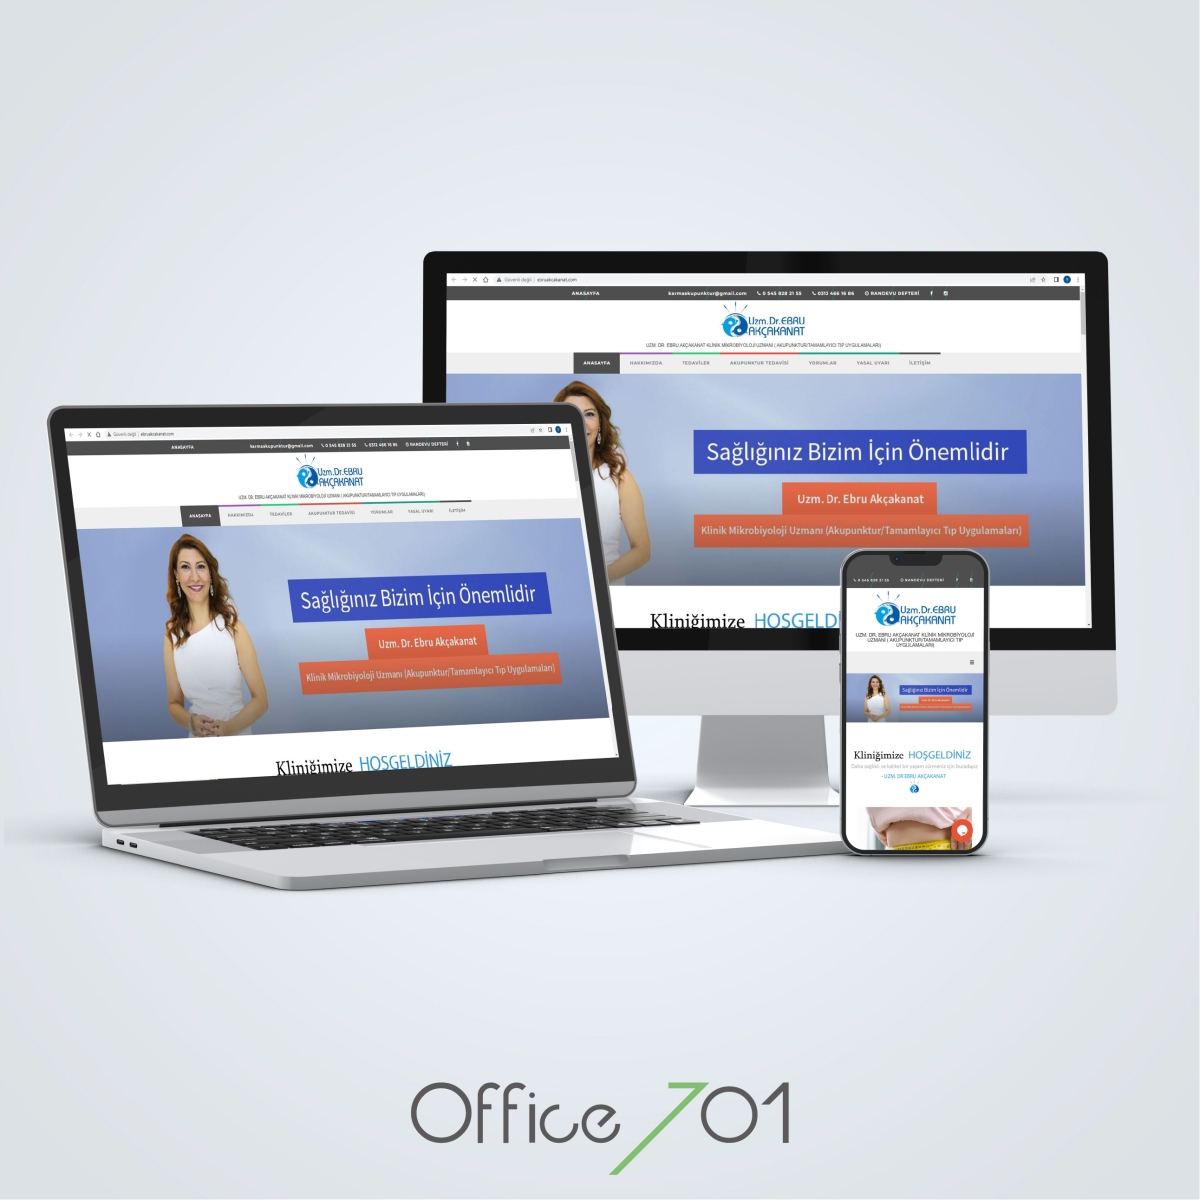 Office701 | Ebru Akçakanat | Healthcare & Medical Website